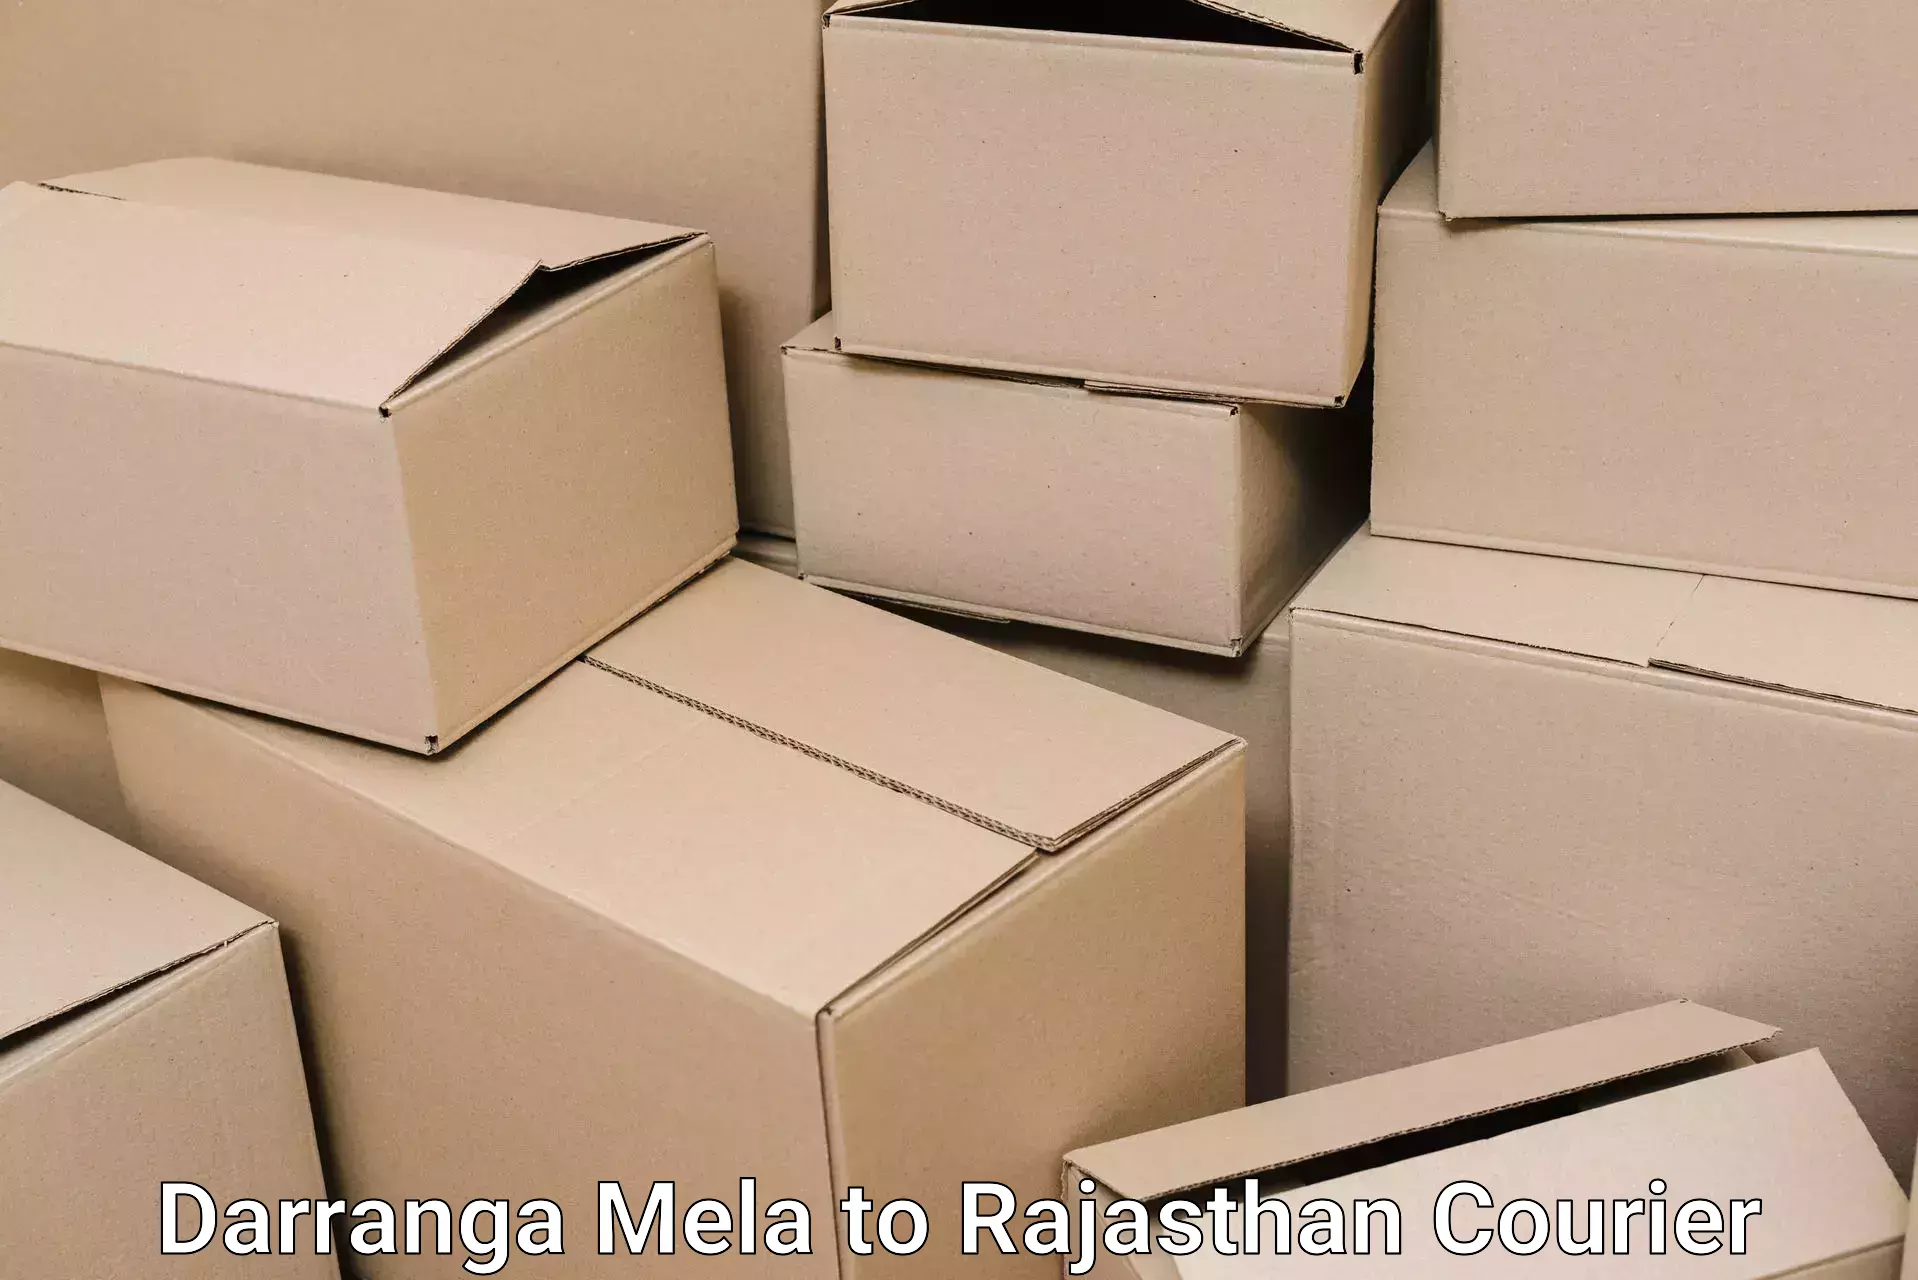 Seamless moving process in Darranga Mela to Sri Ganganagar